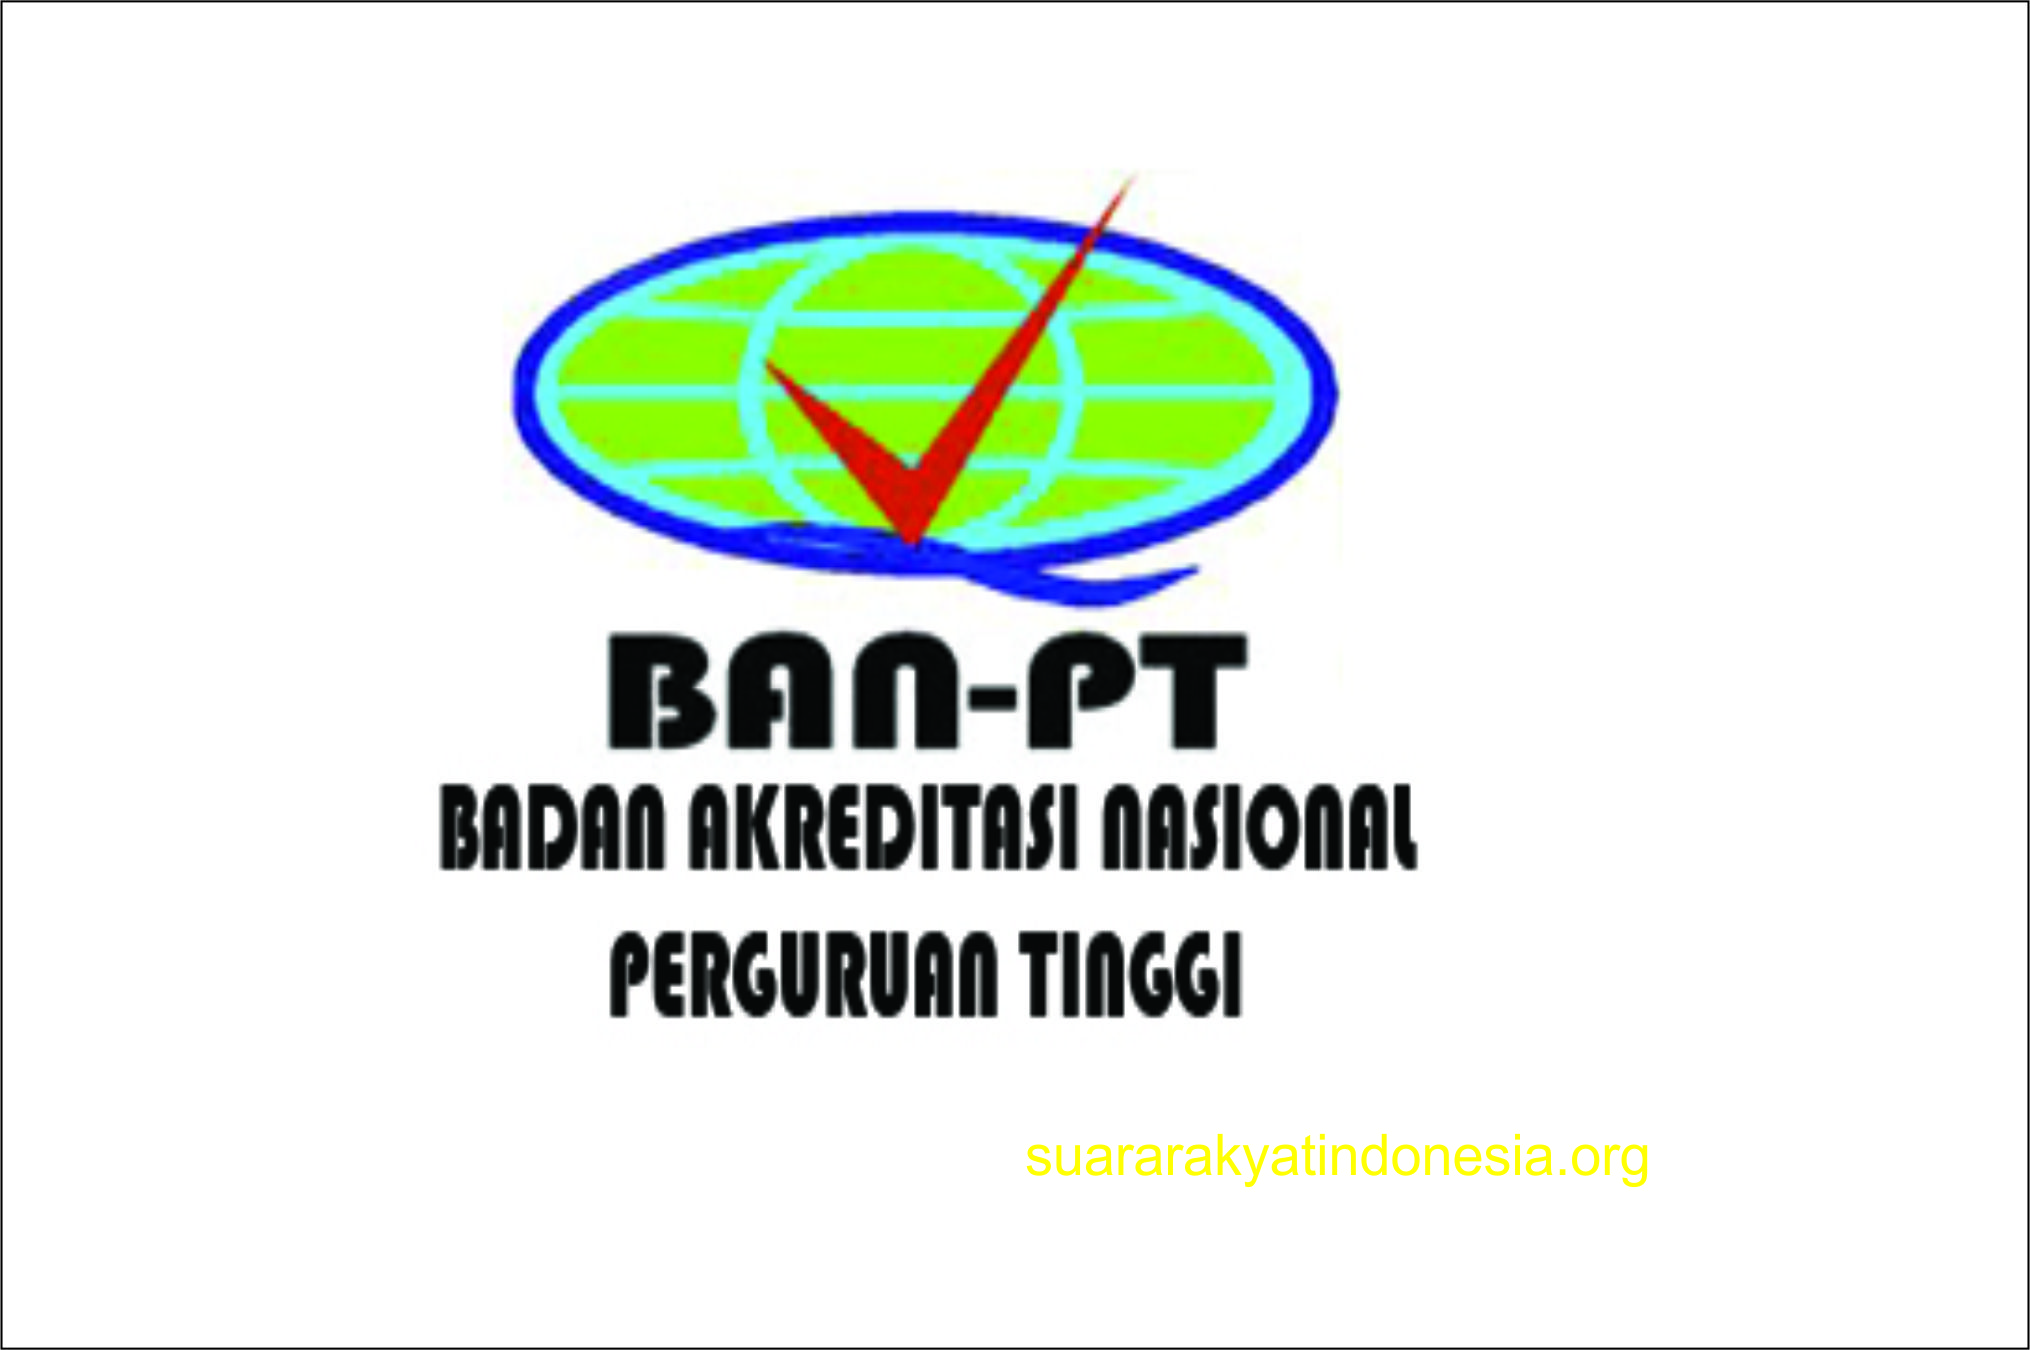 Ban Pt Akreditasi